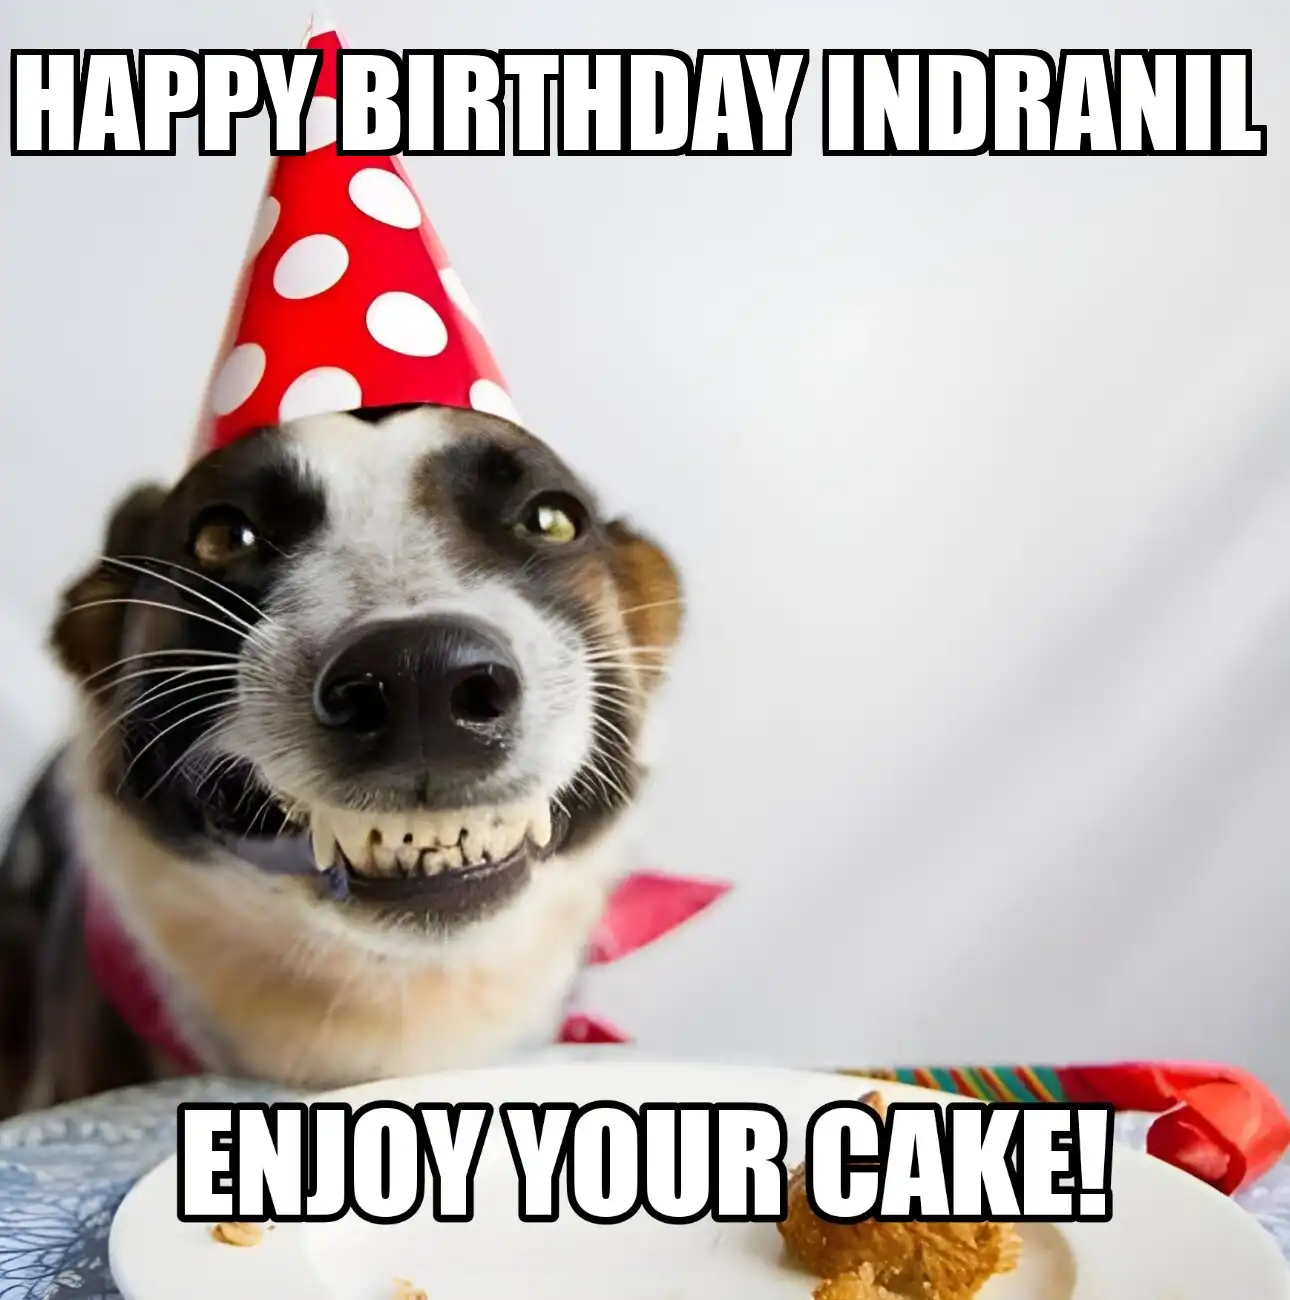 Happy Birthday Indranil Enjoy Your Cake Dog Meme